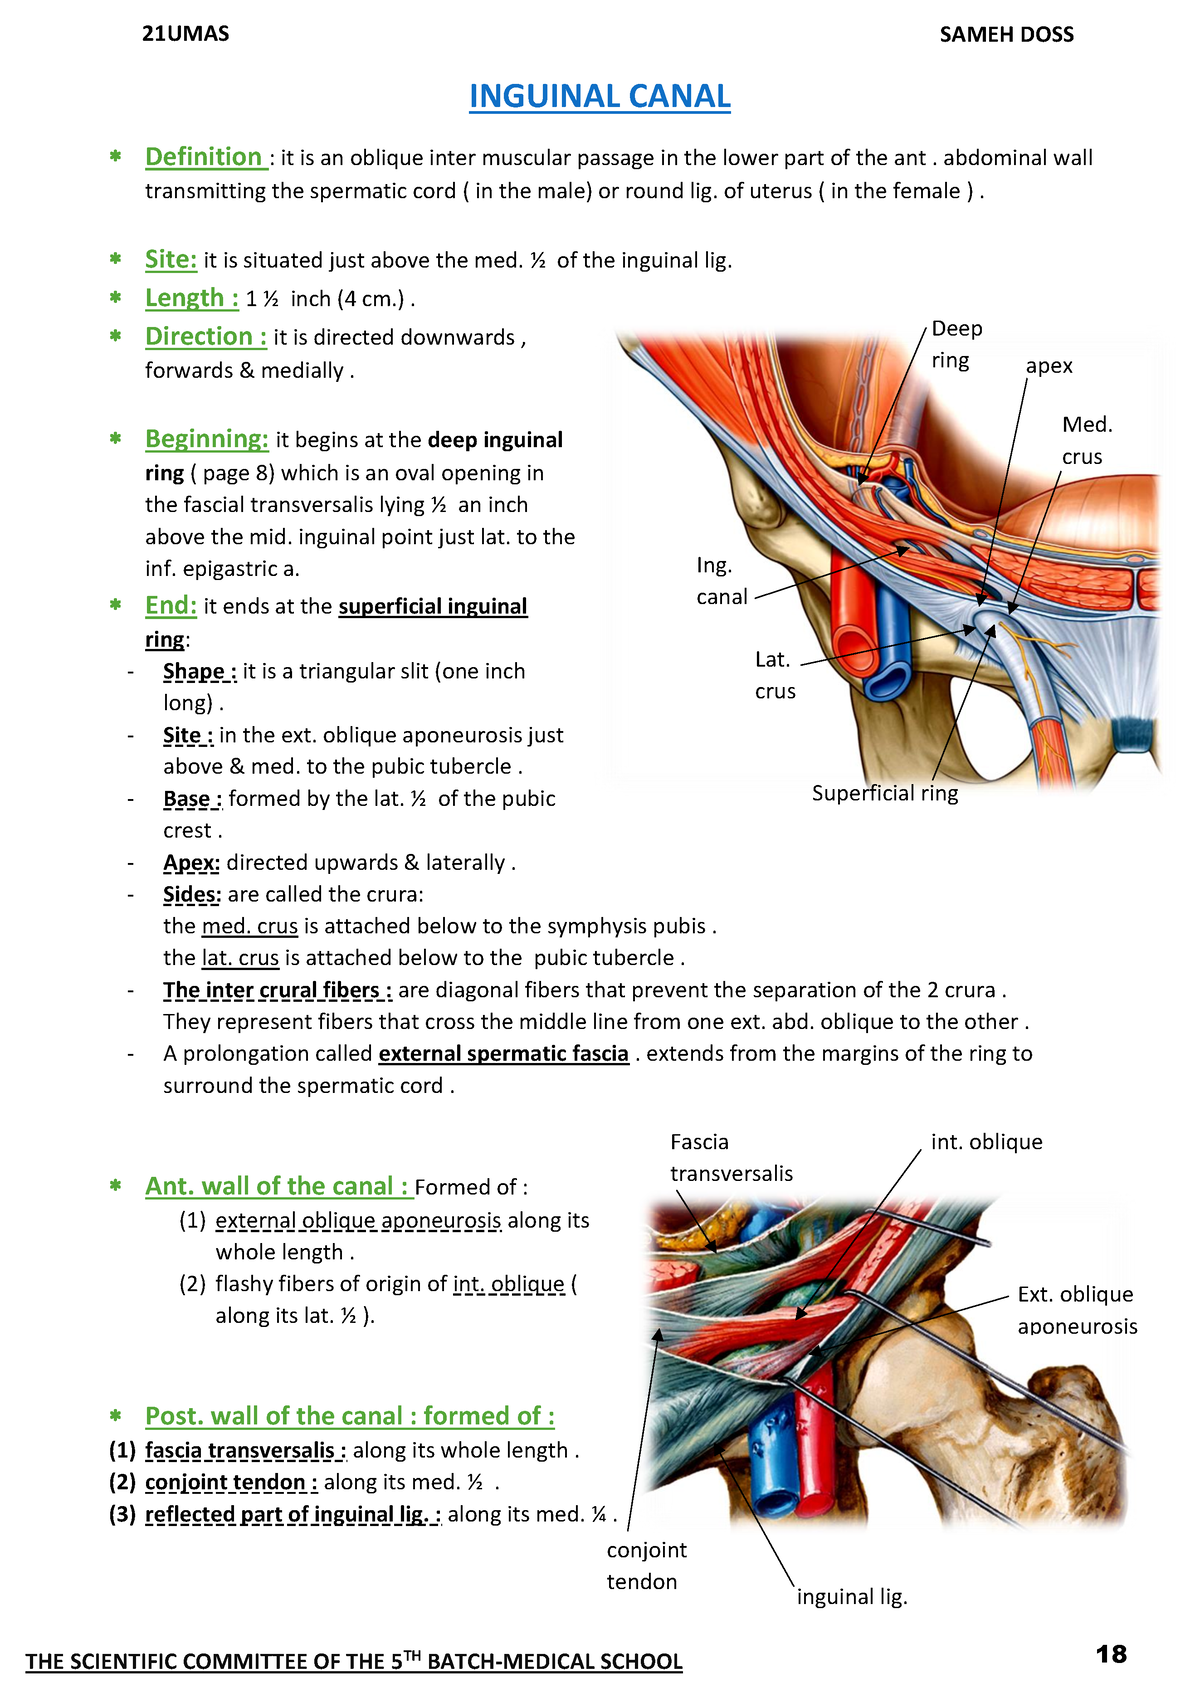 Inguinal canal | anatomy | Britannica